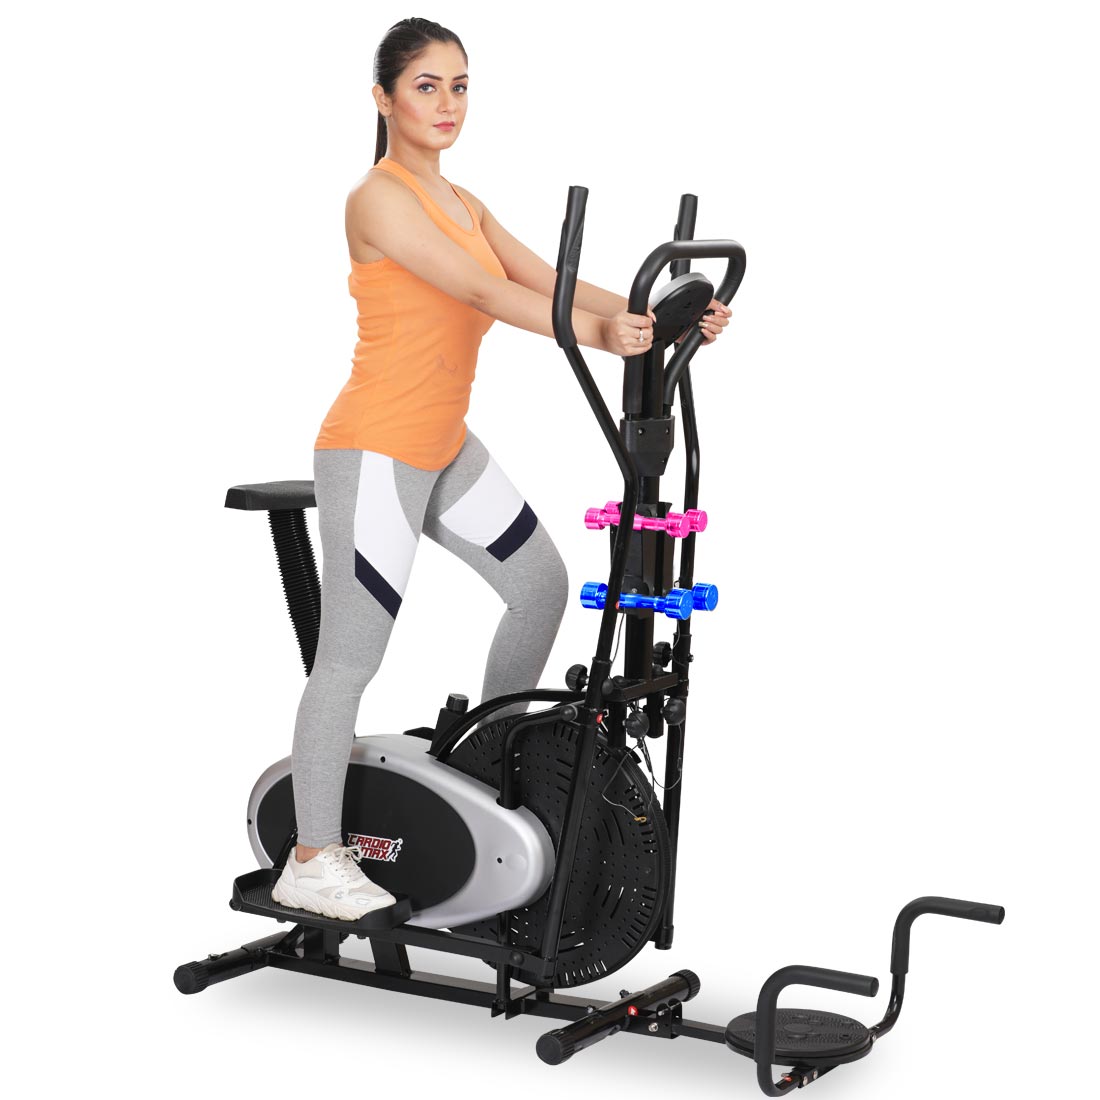 orbitrac exercise cycle elliptical cross trainer jsb hf150